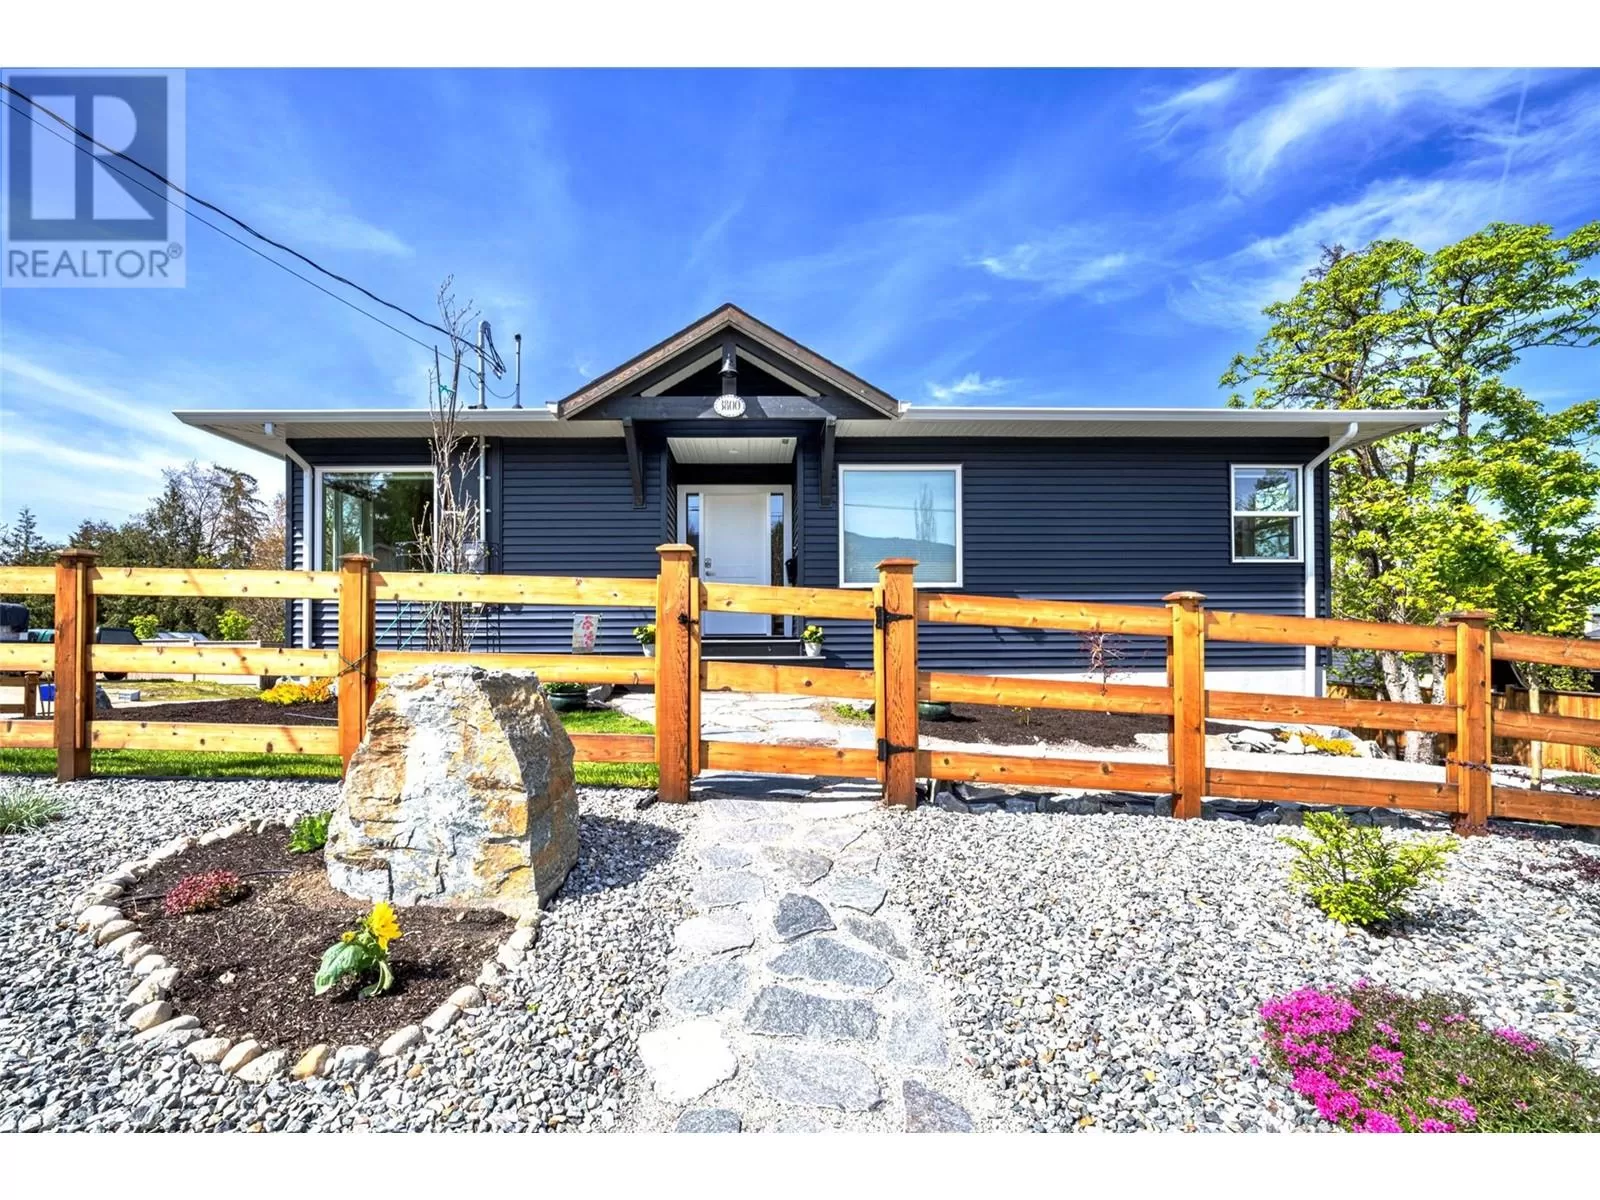 House for rent: 3800 19th Street, Vernon, British Columbia V1T 4B9